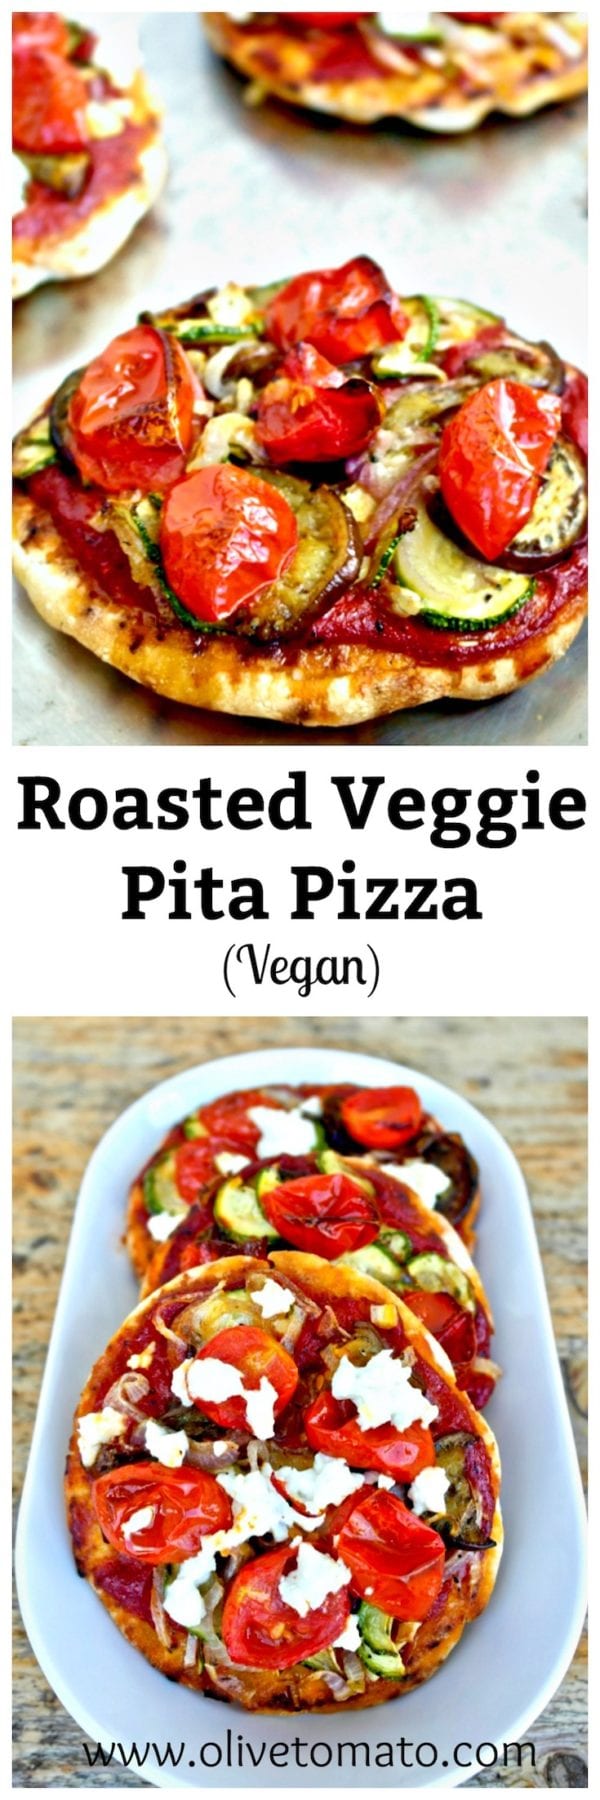 Greek Roasted Veggie Pita Pizza - Olive Tomato